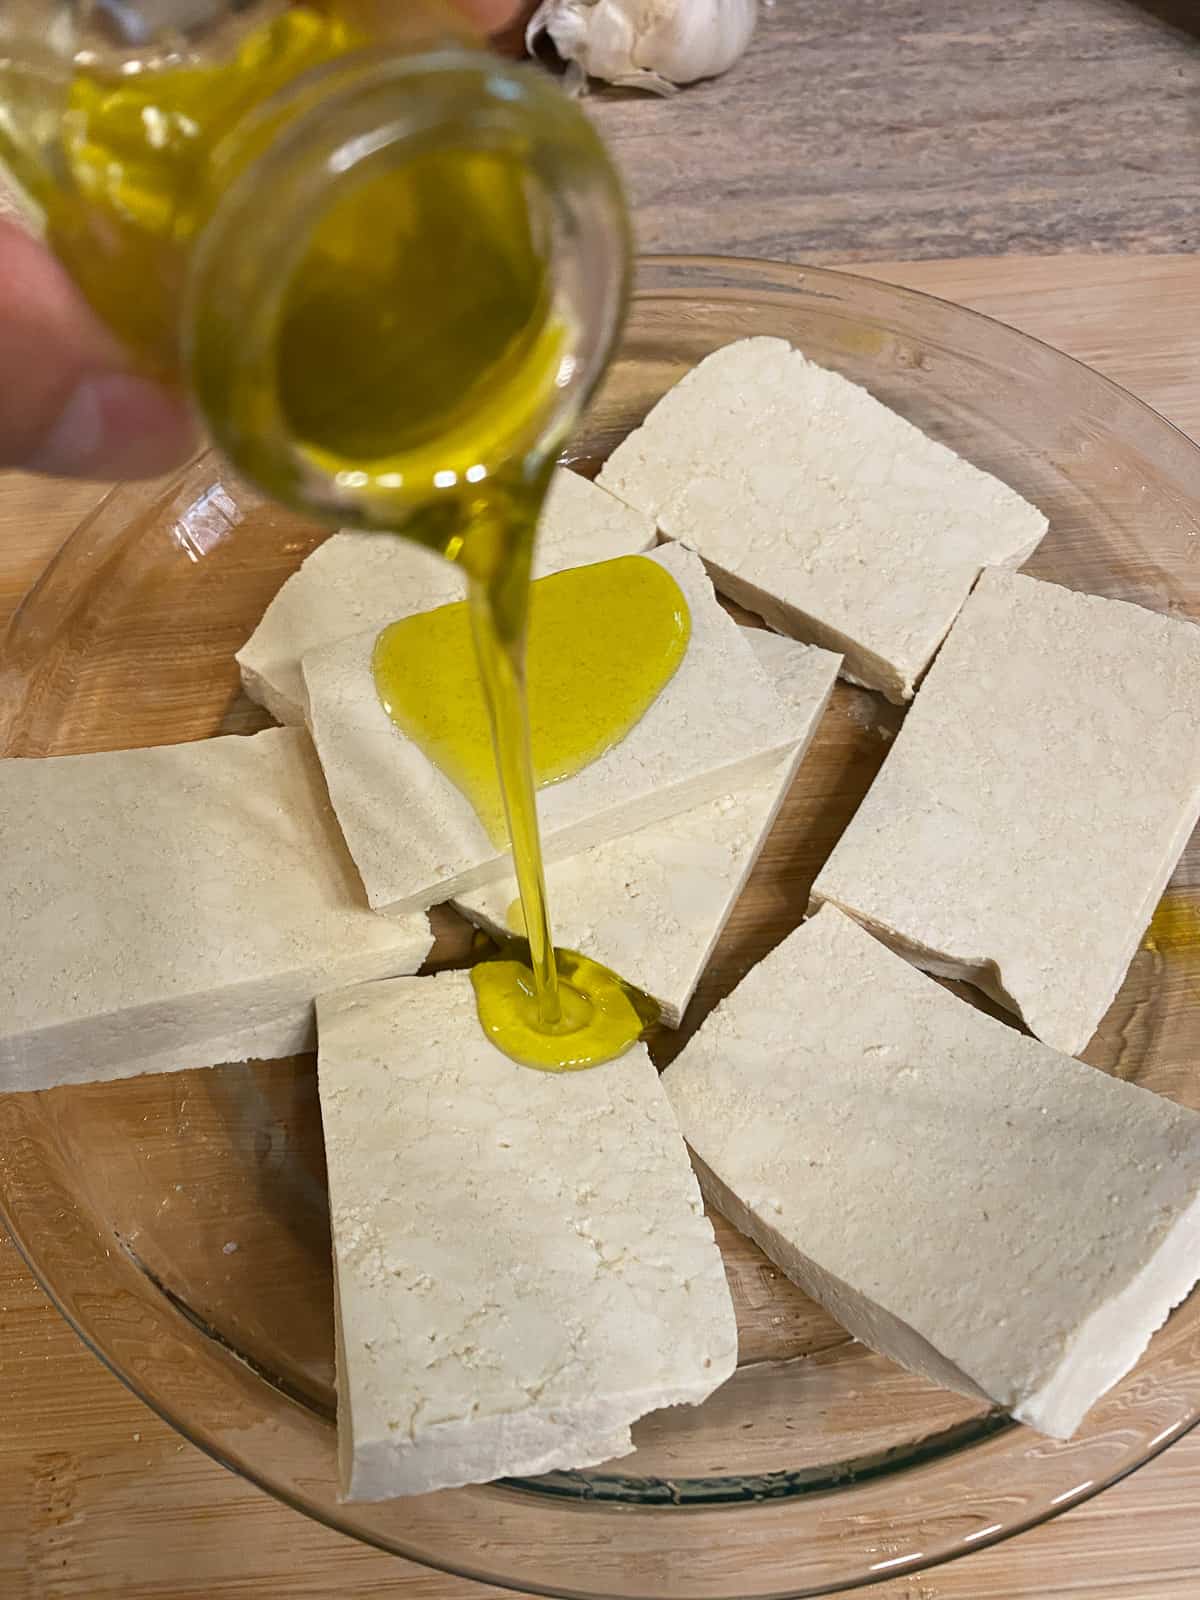 process of adding oil to blocks of tofu